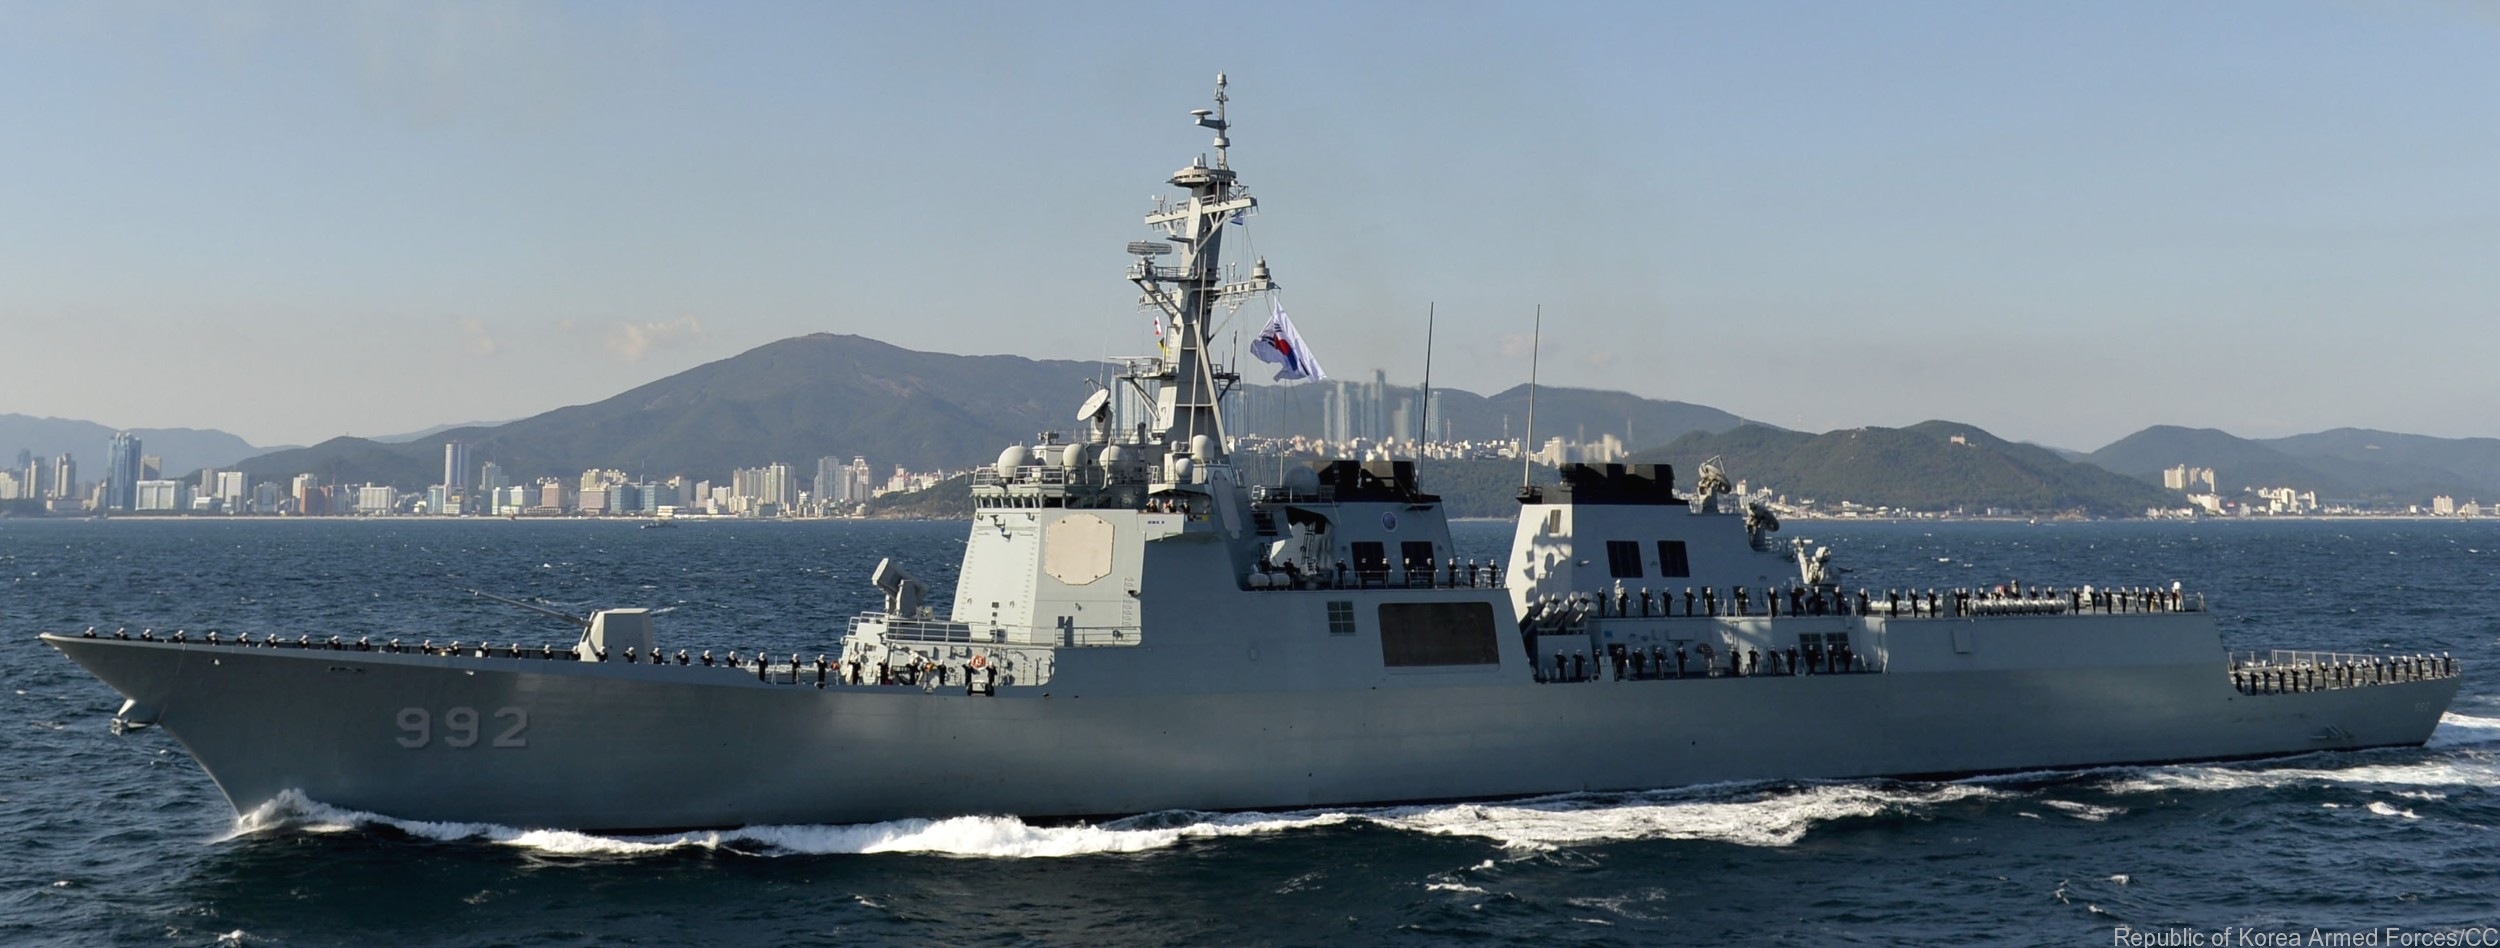 ddg-992 roks yulgok yi i sejong the great class guided missile destroyer aegis republic of korean navy rokn 14